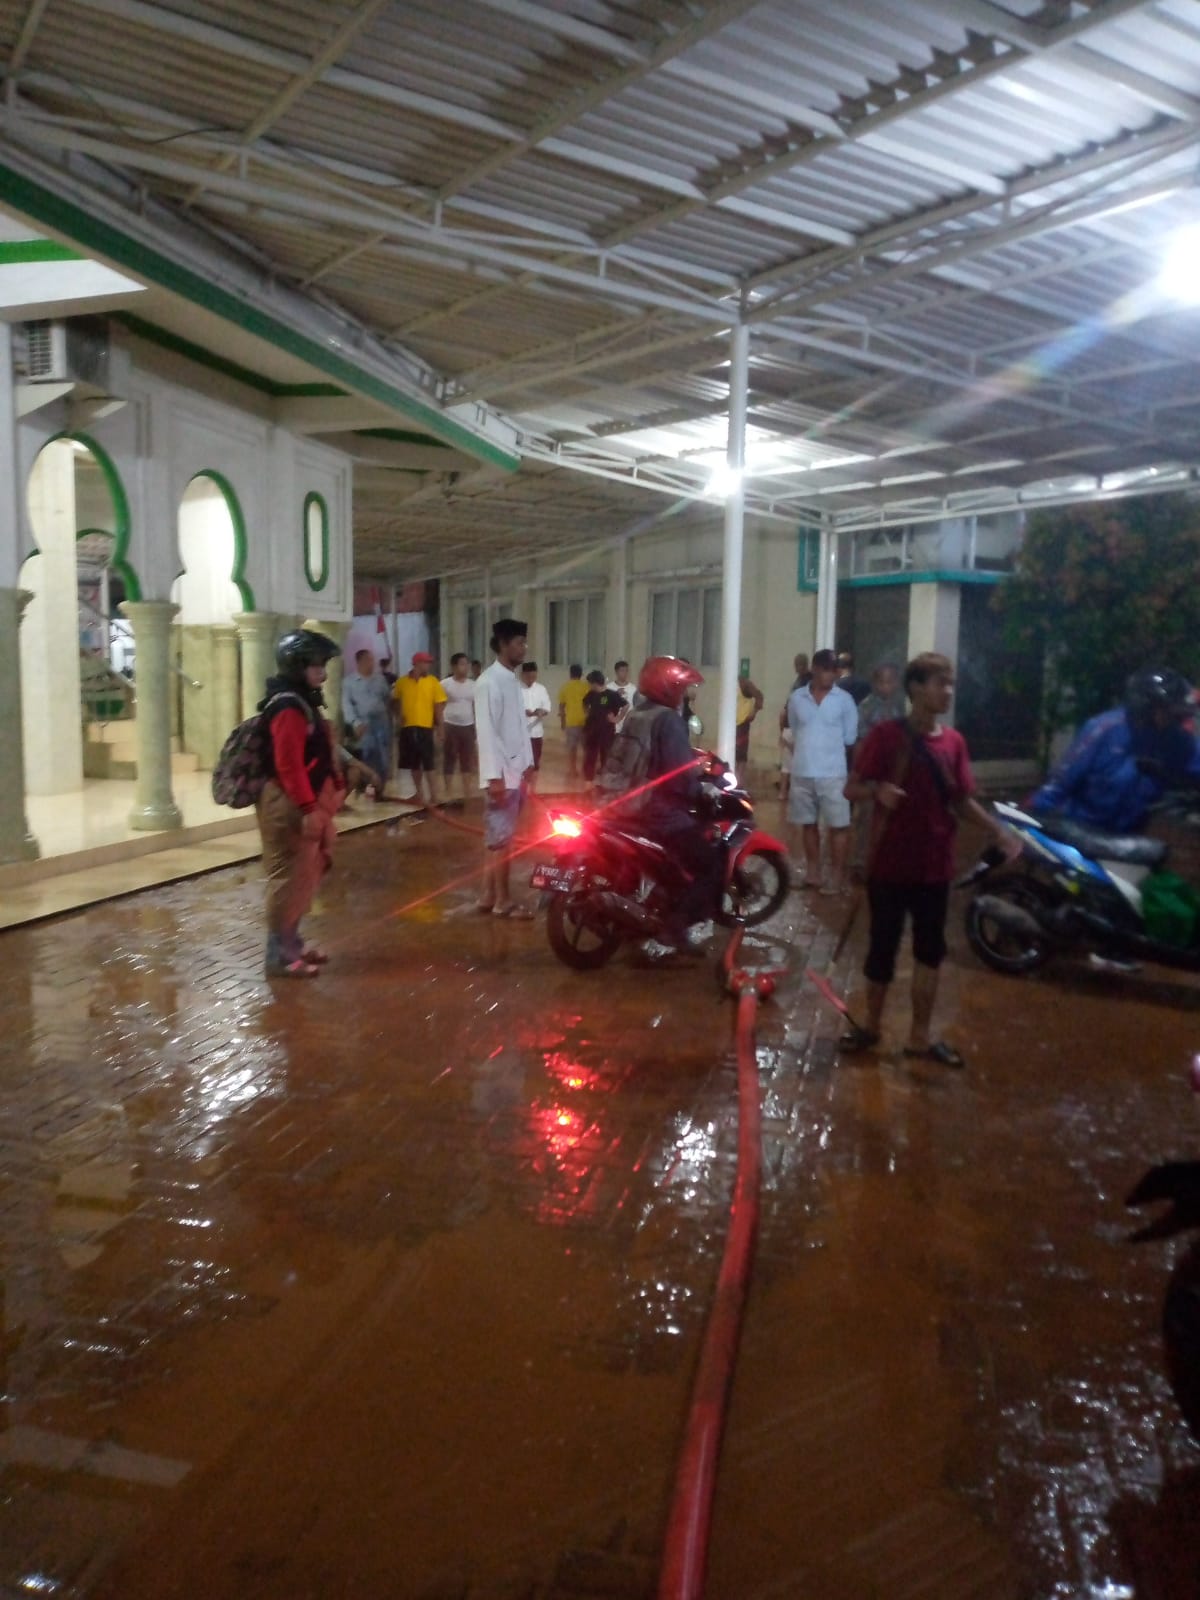 Akhirnya Diketahui, Ini Penyebab Banjir yang Genangi Area Masjid di Serpong